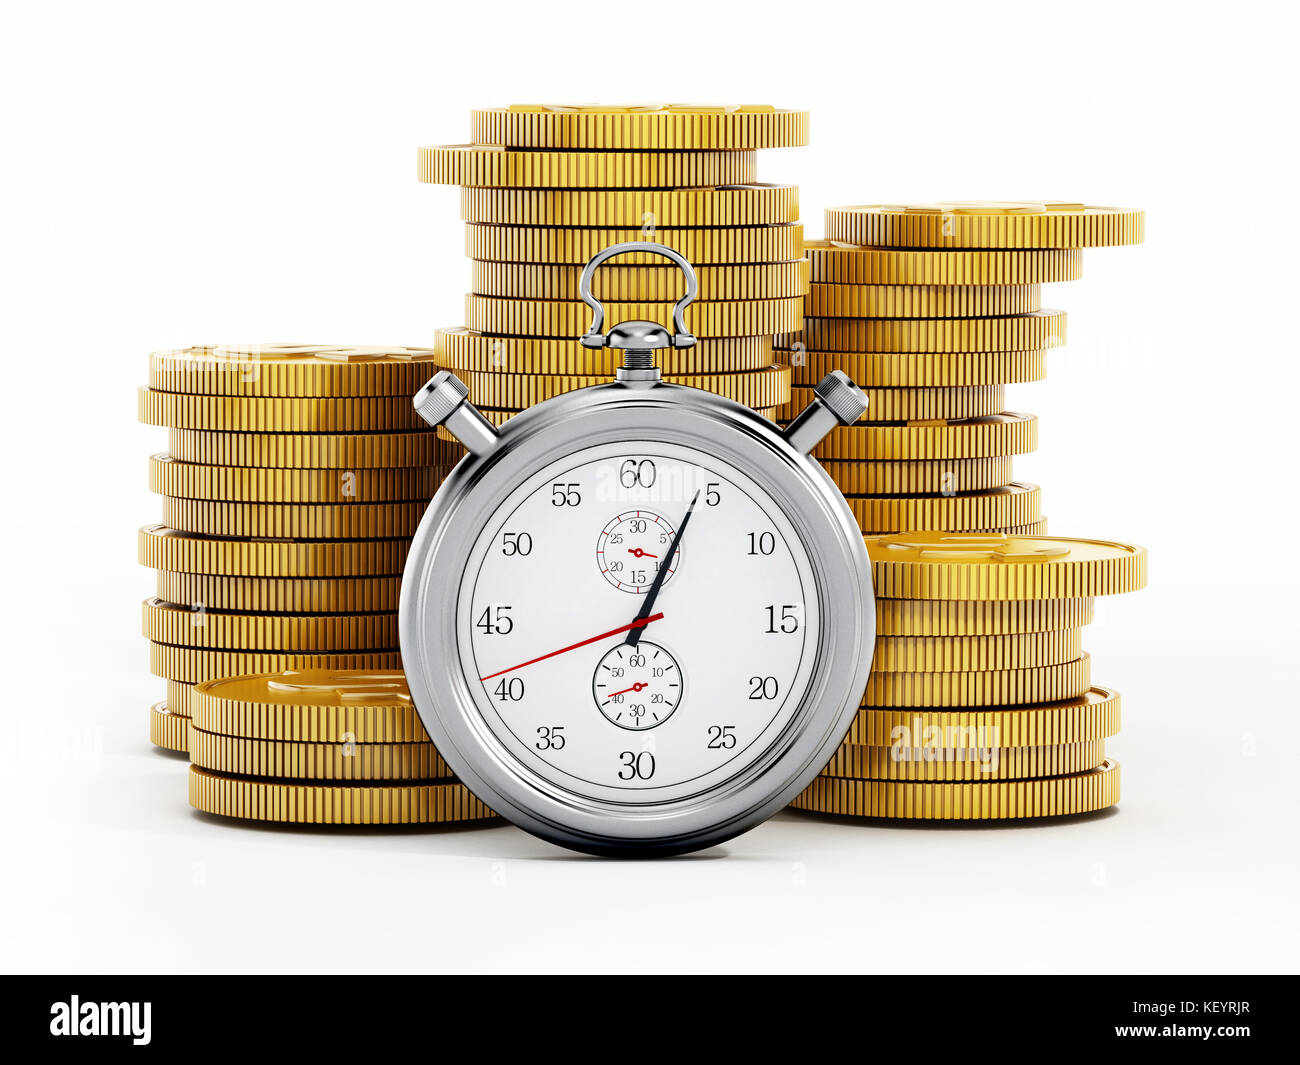 Chronometer standing on golden coins stack. 3D illustration. Stock Photo